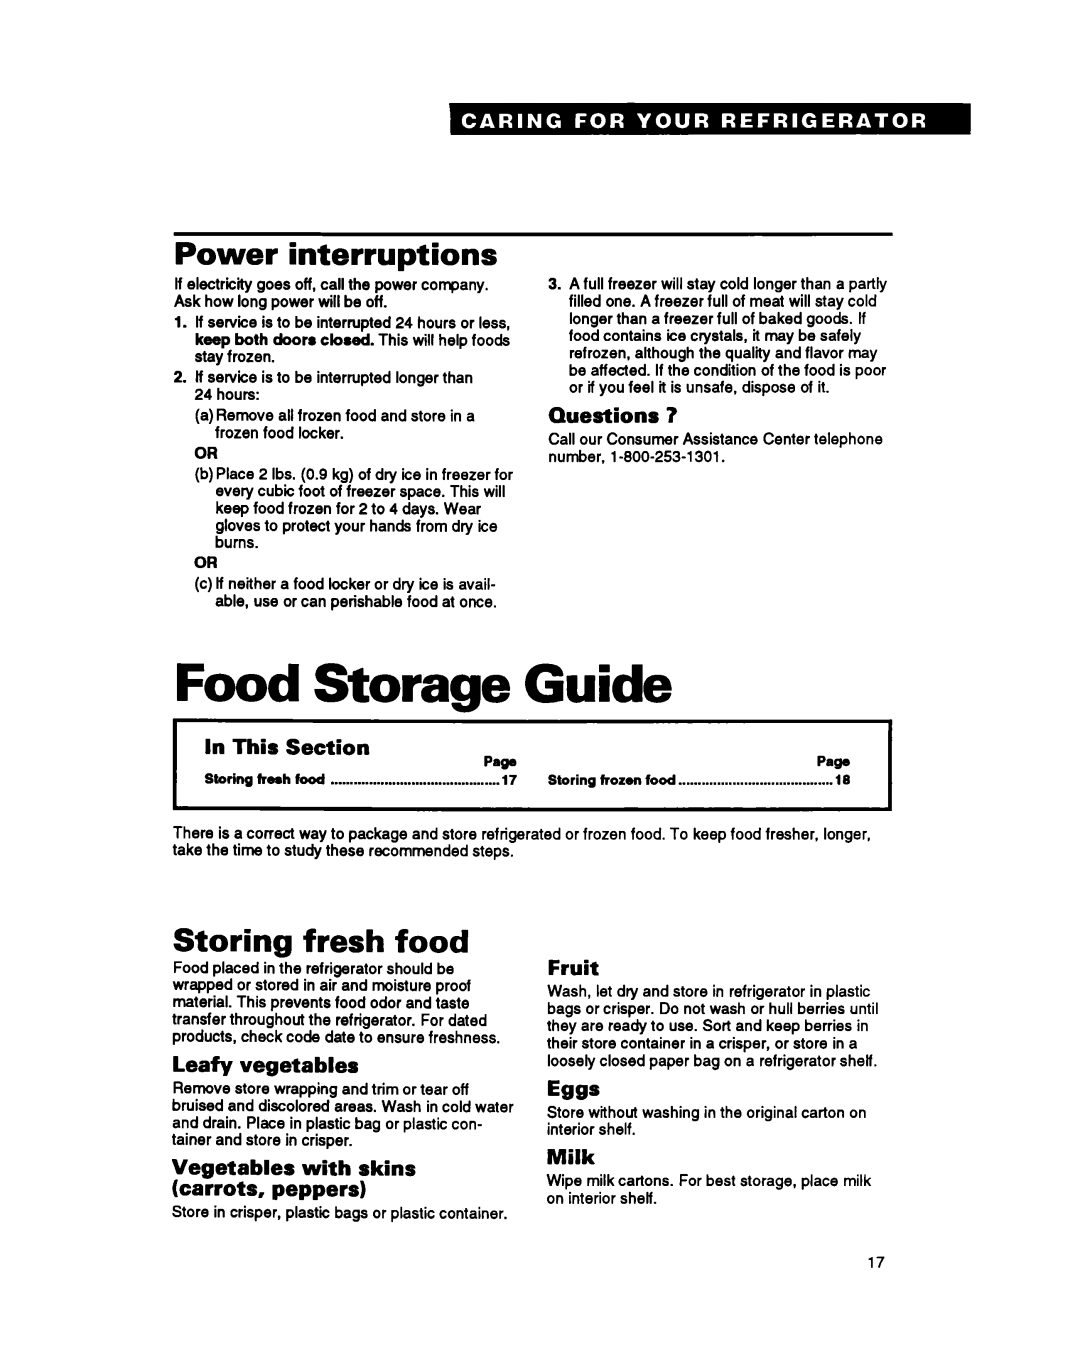 Whirlpool EB21DK Food Storage Guide, Power interruptions, Storing fresh food, Questions ‘1, Leafy vegetables, Fruit, Milk 